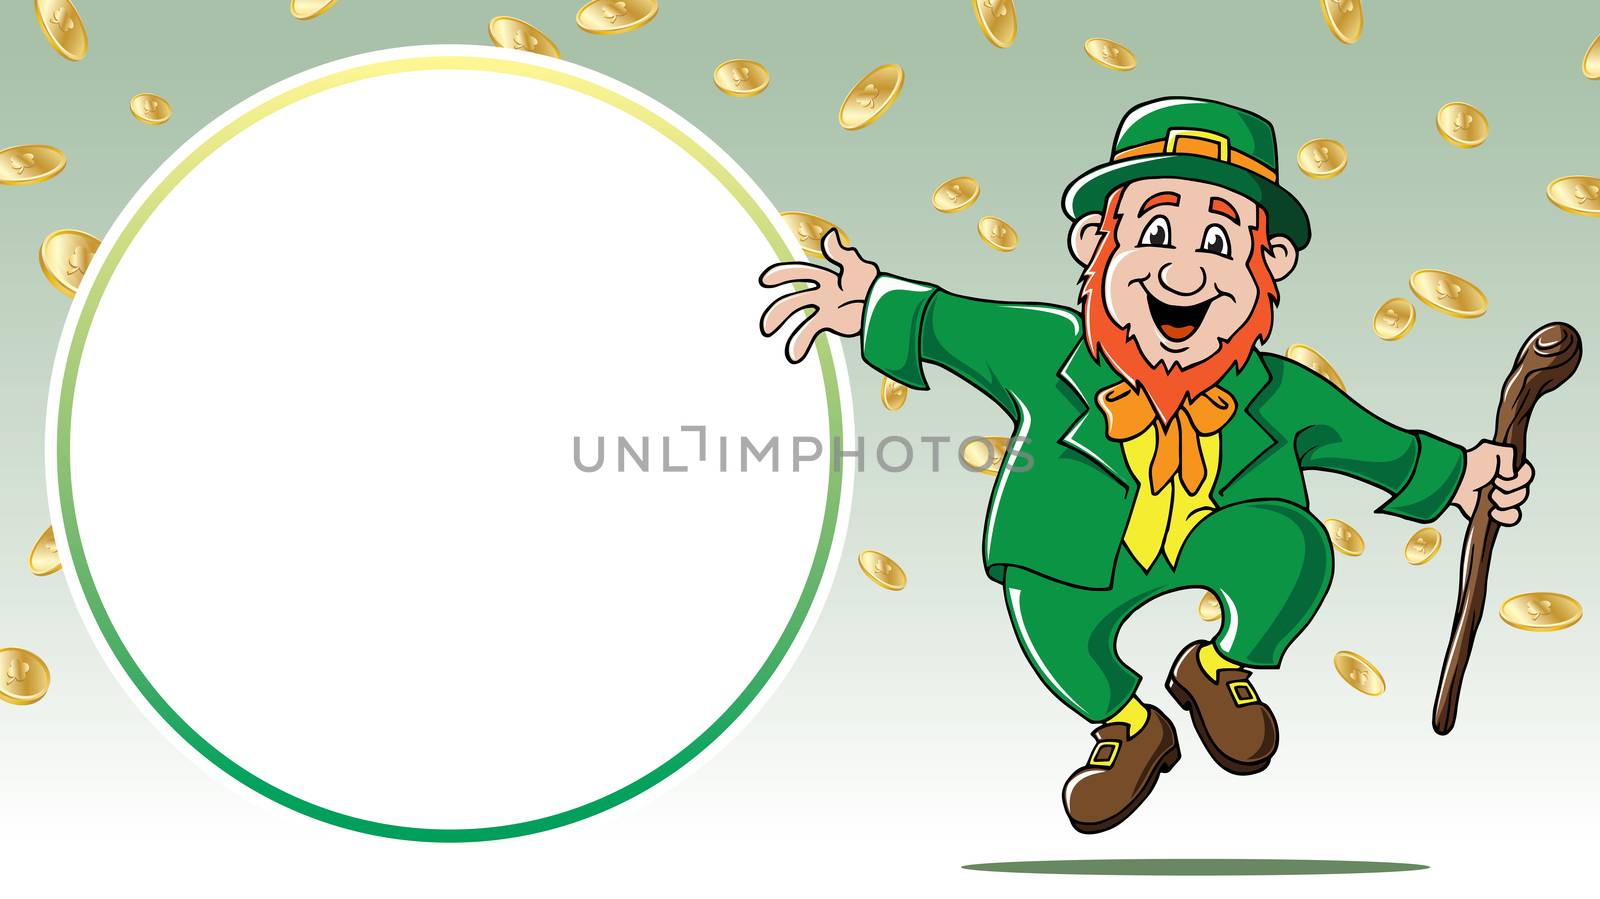 Saint Patrick's Day leprechaun dancing among gold coins retail s by illstudio